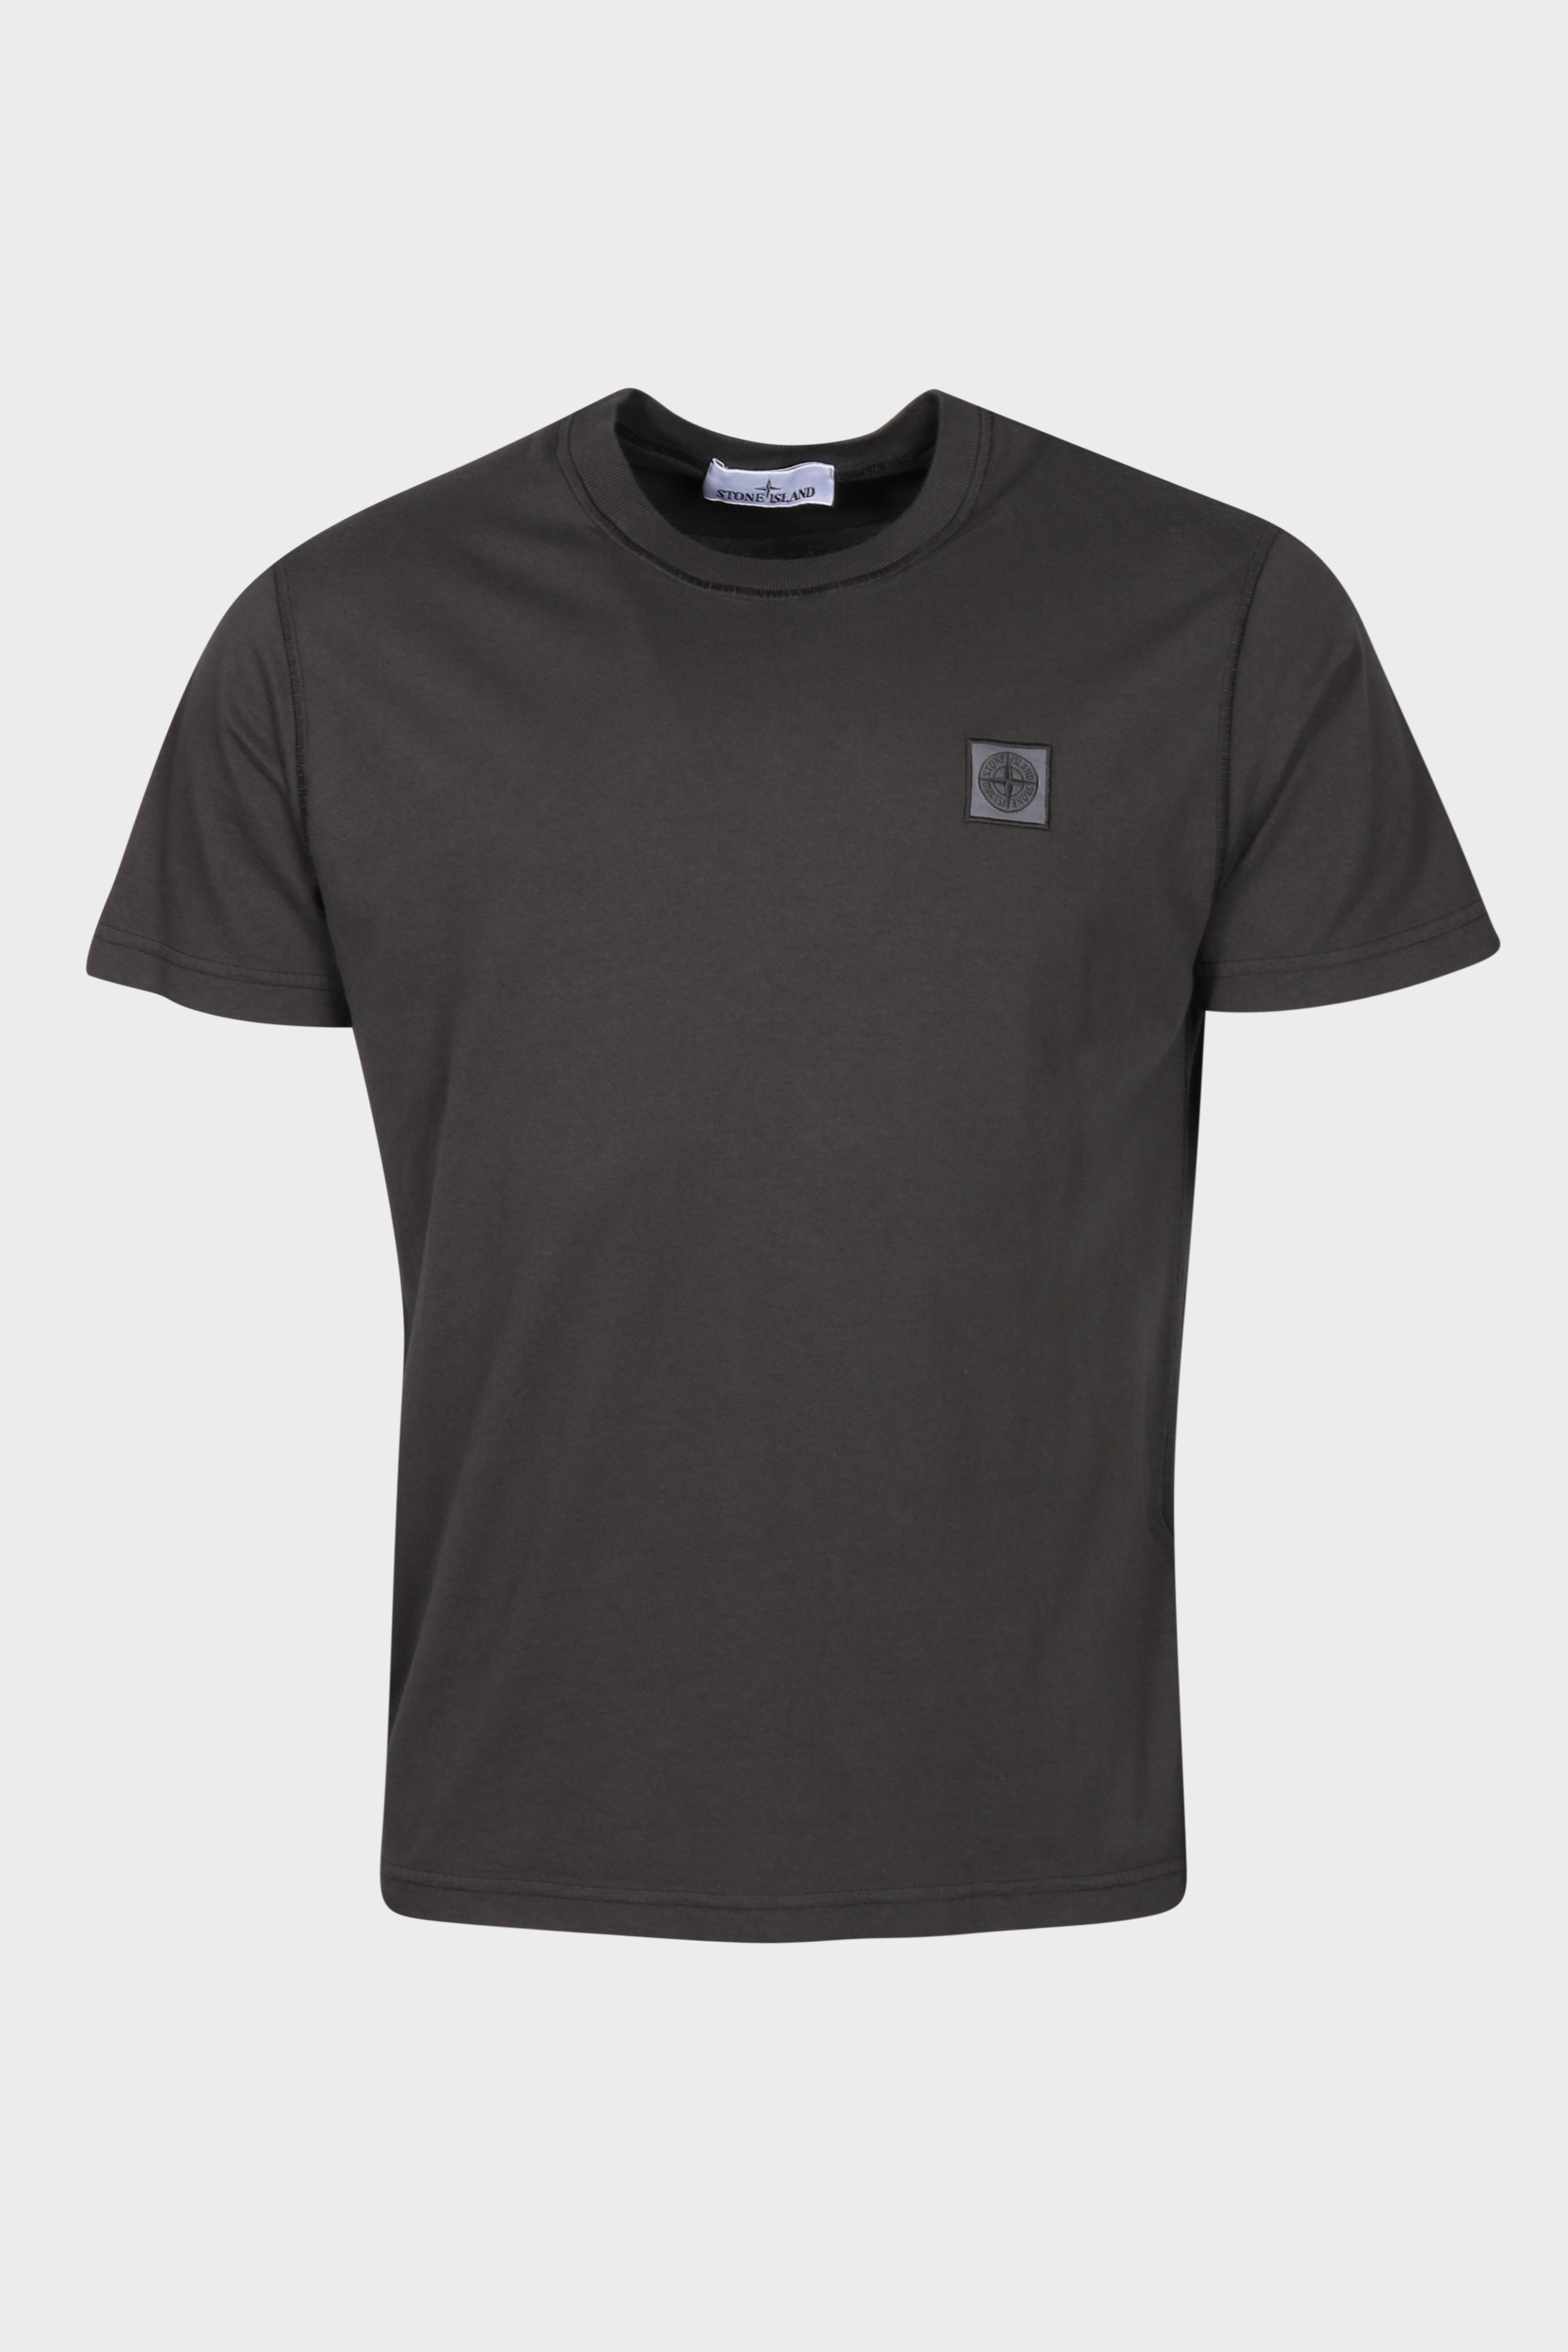 STONE ISLAND T-Shirt in Dark Grey M